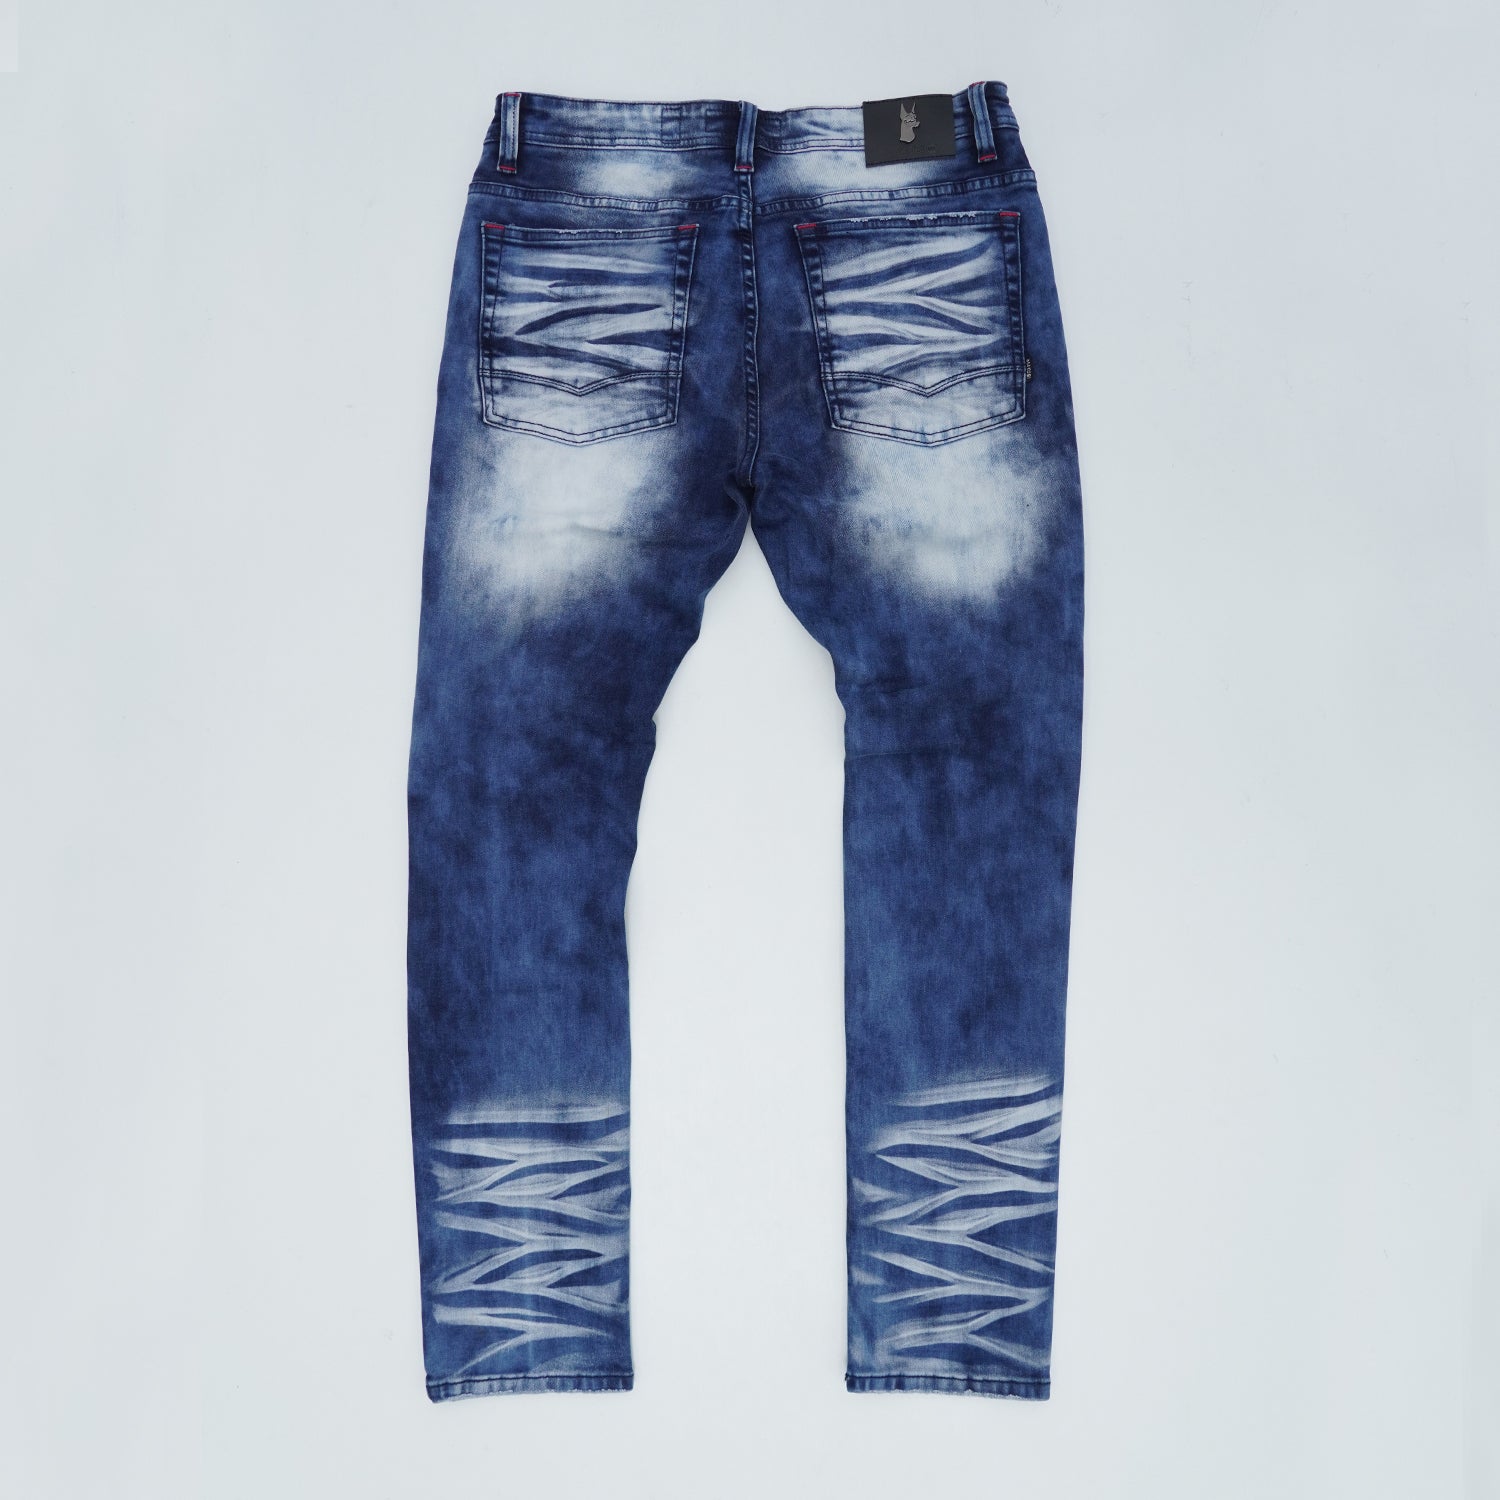 M1970 Ashton Shredded Jeans- Dark Wash